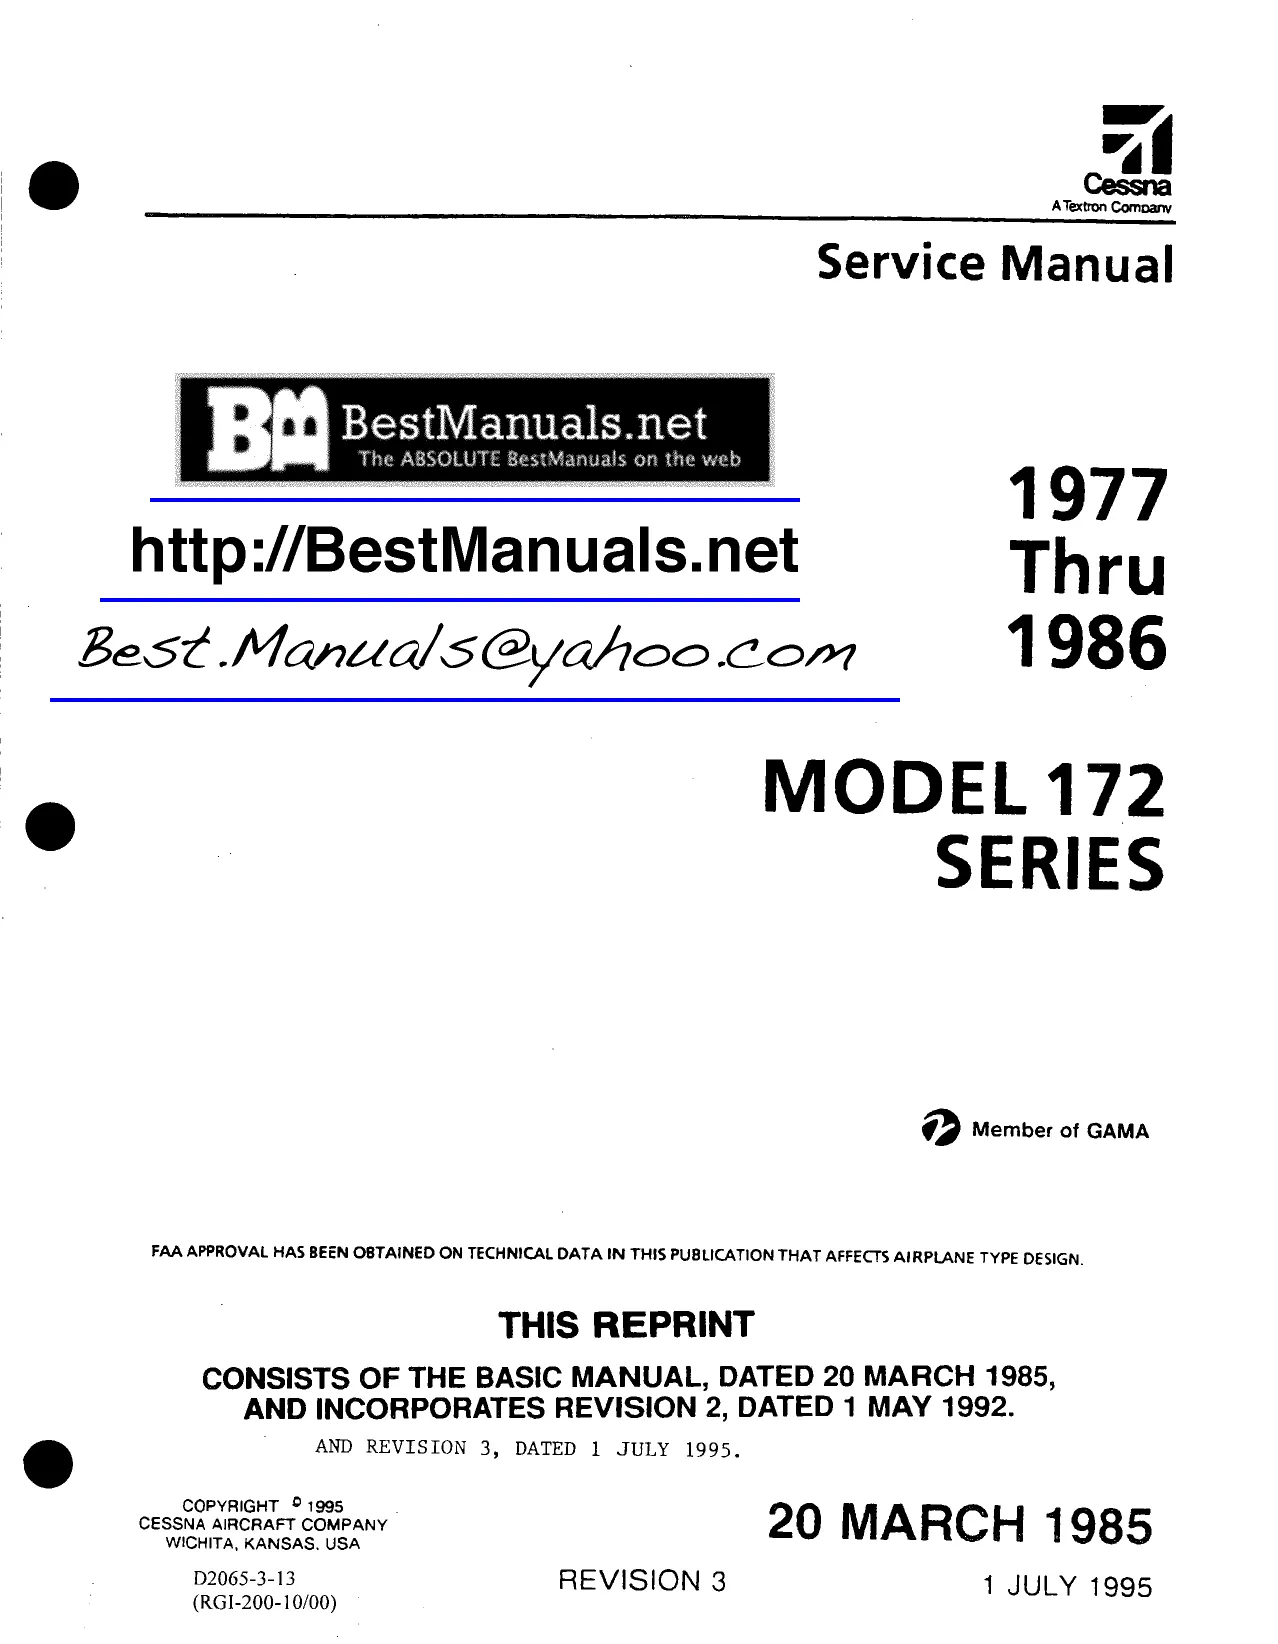 1977-1986 Cessna 172 N Skyhawk aircraft service manual, parts list